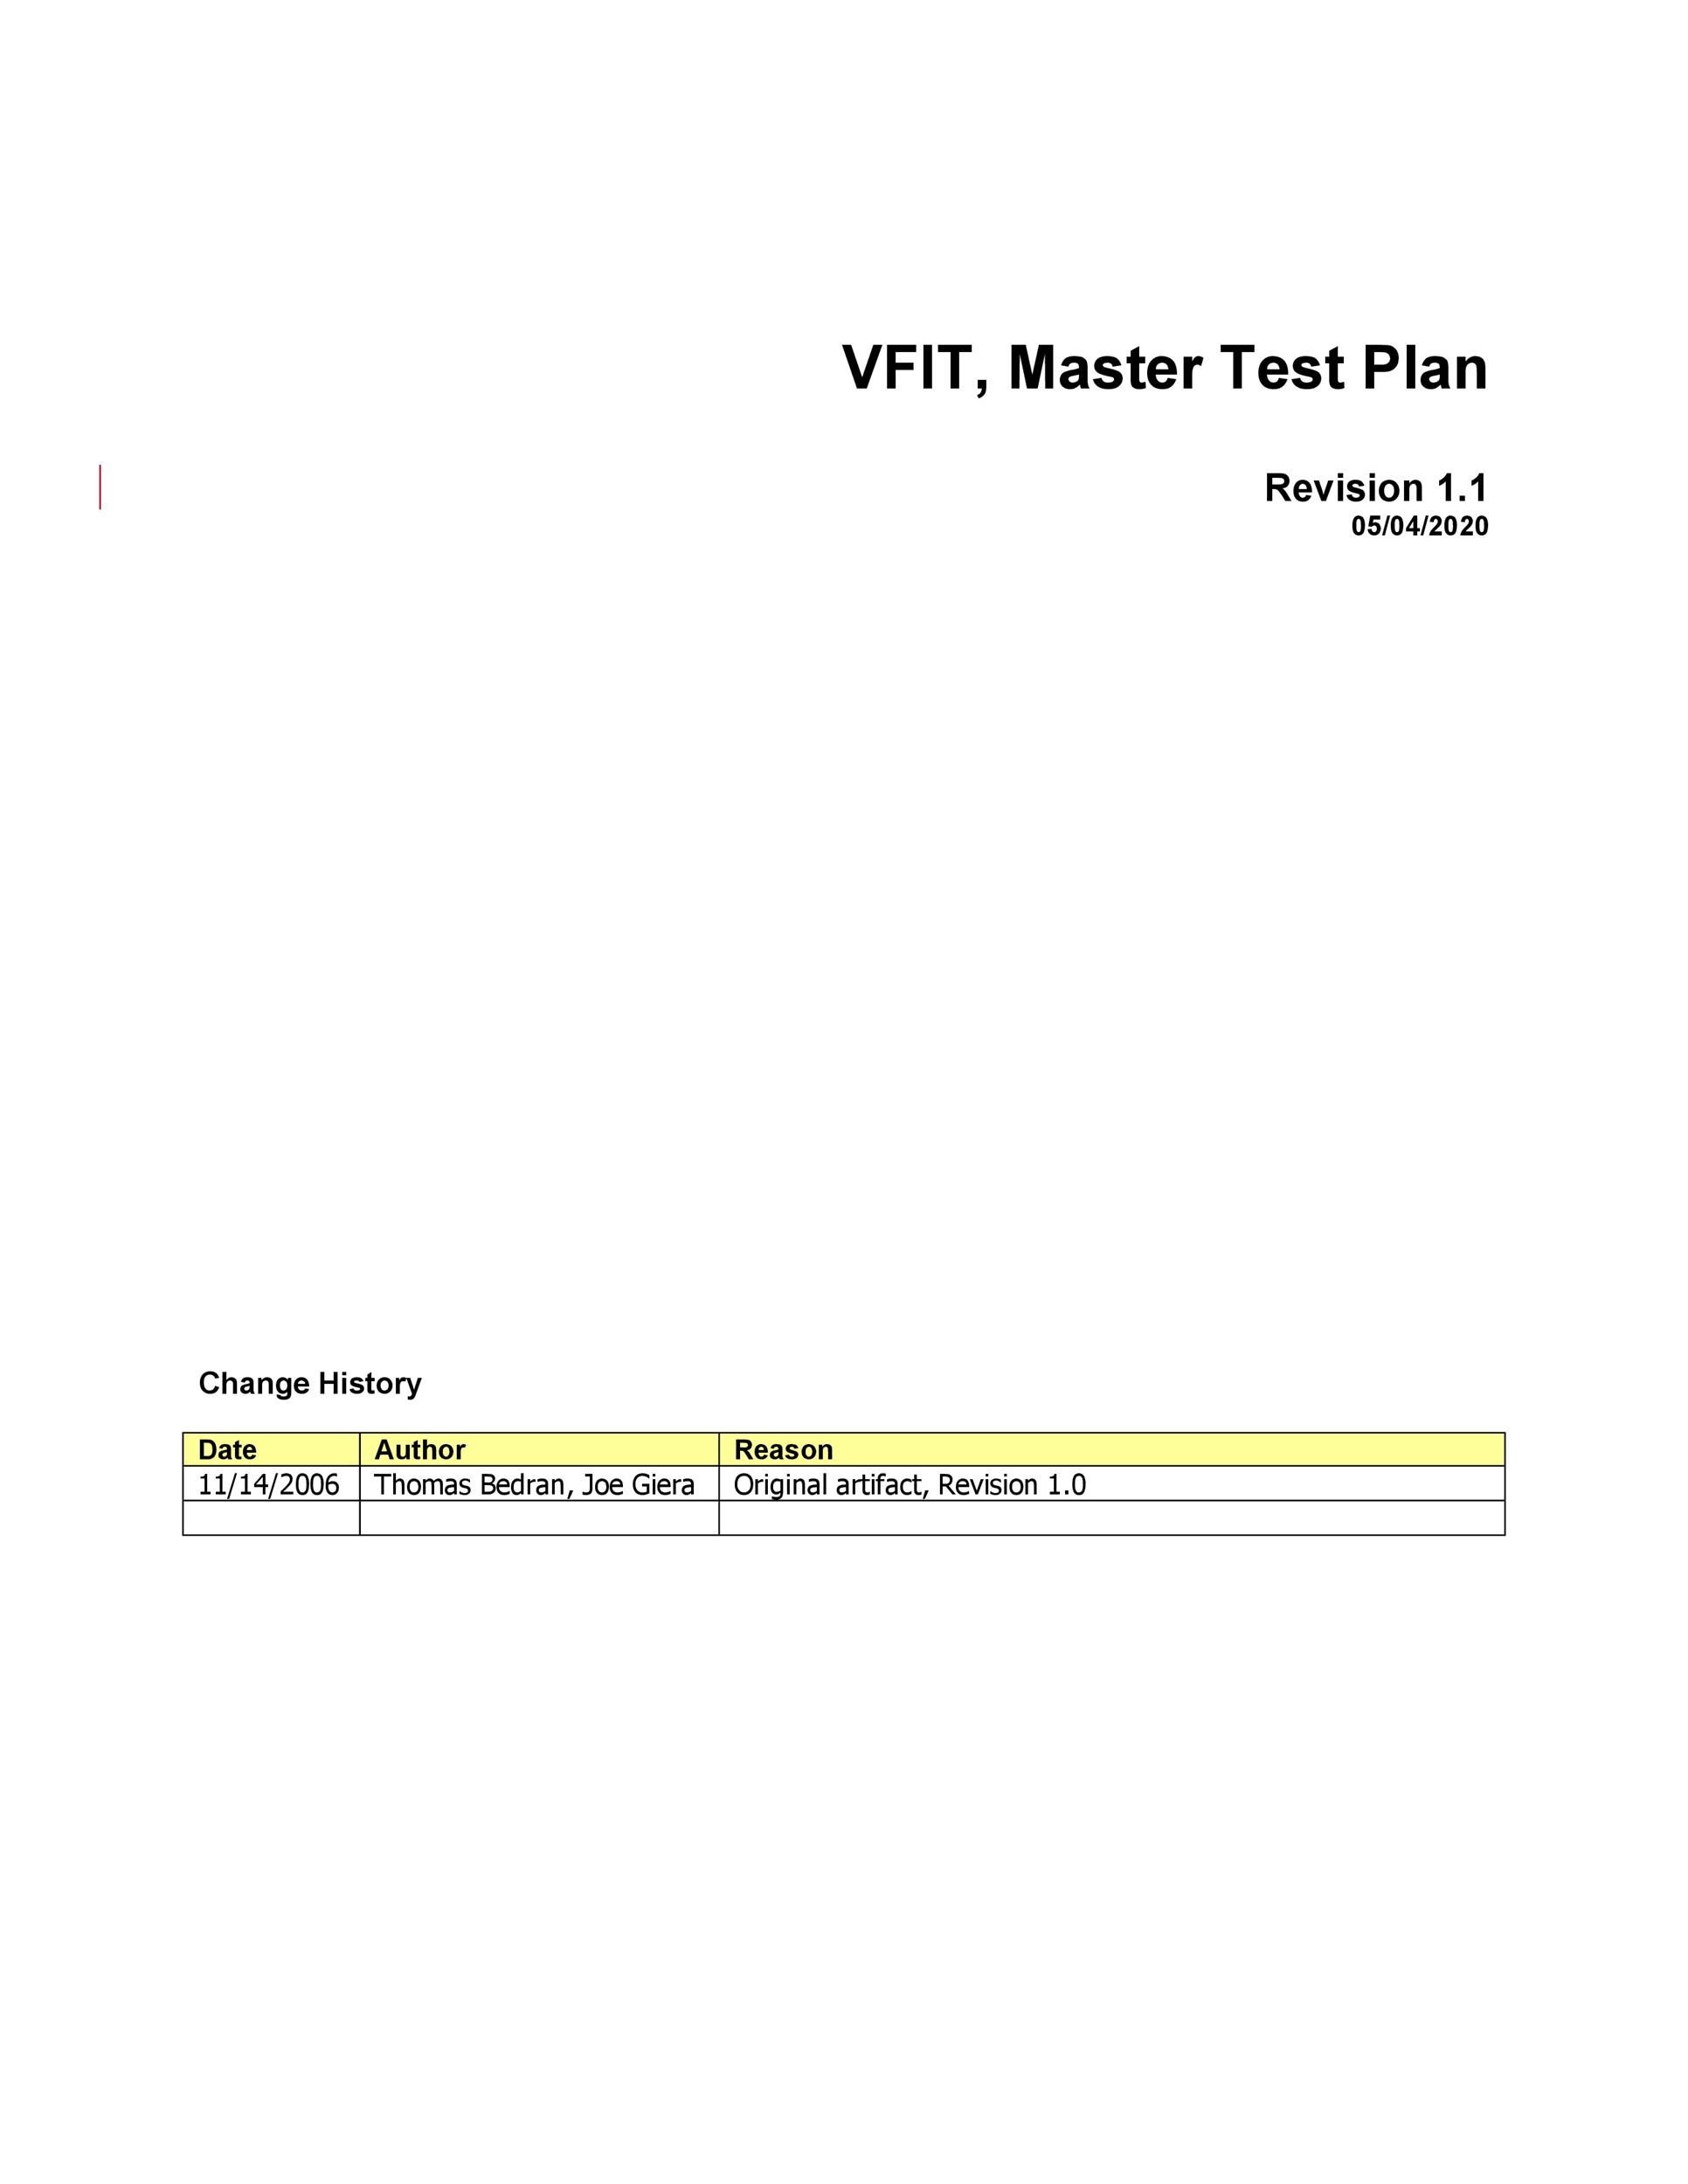 Free Test Plan Template 16